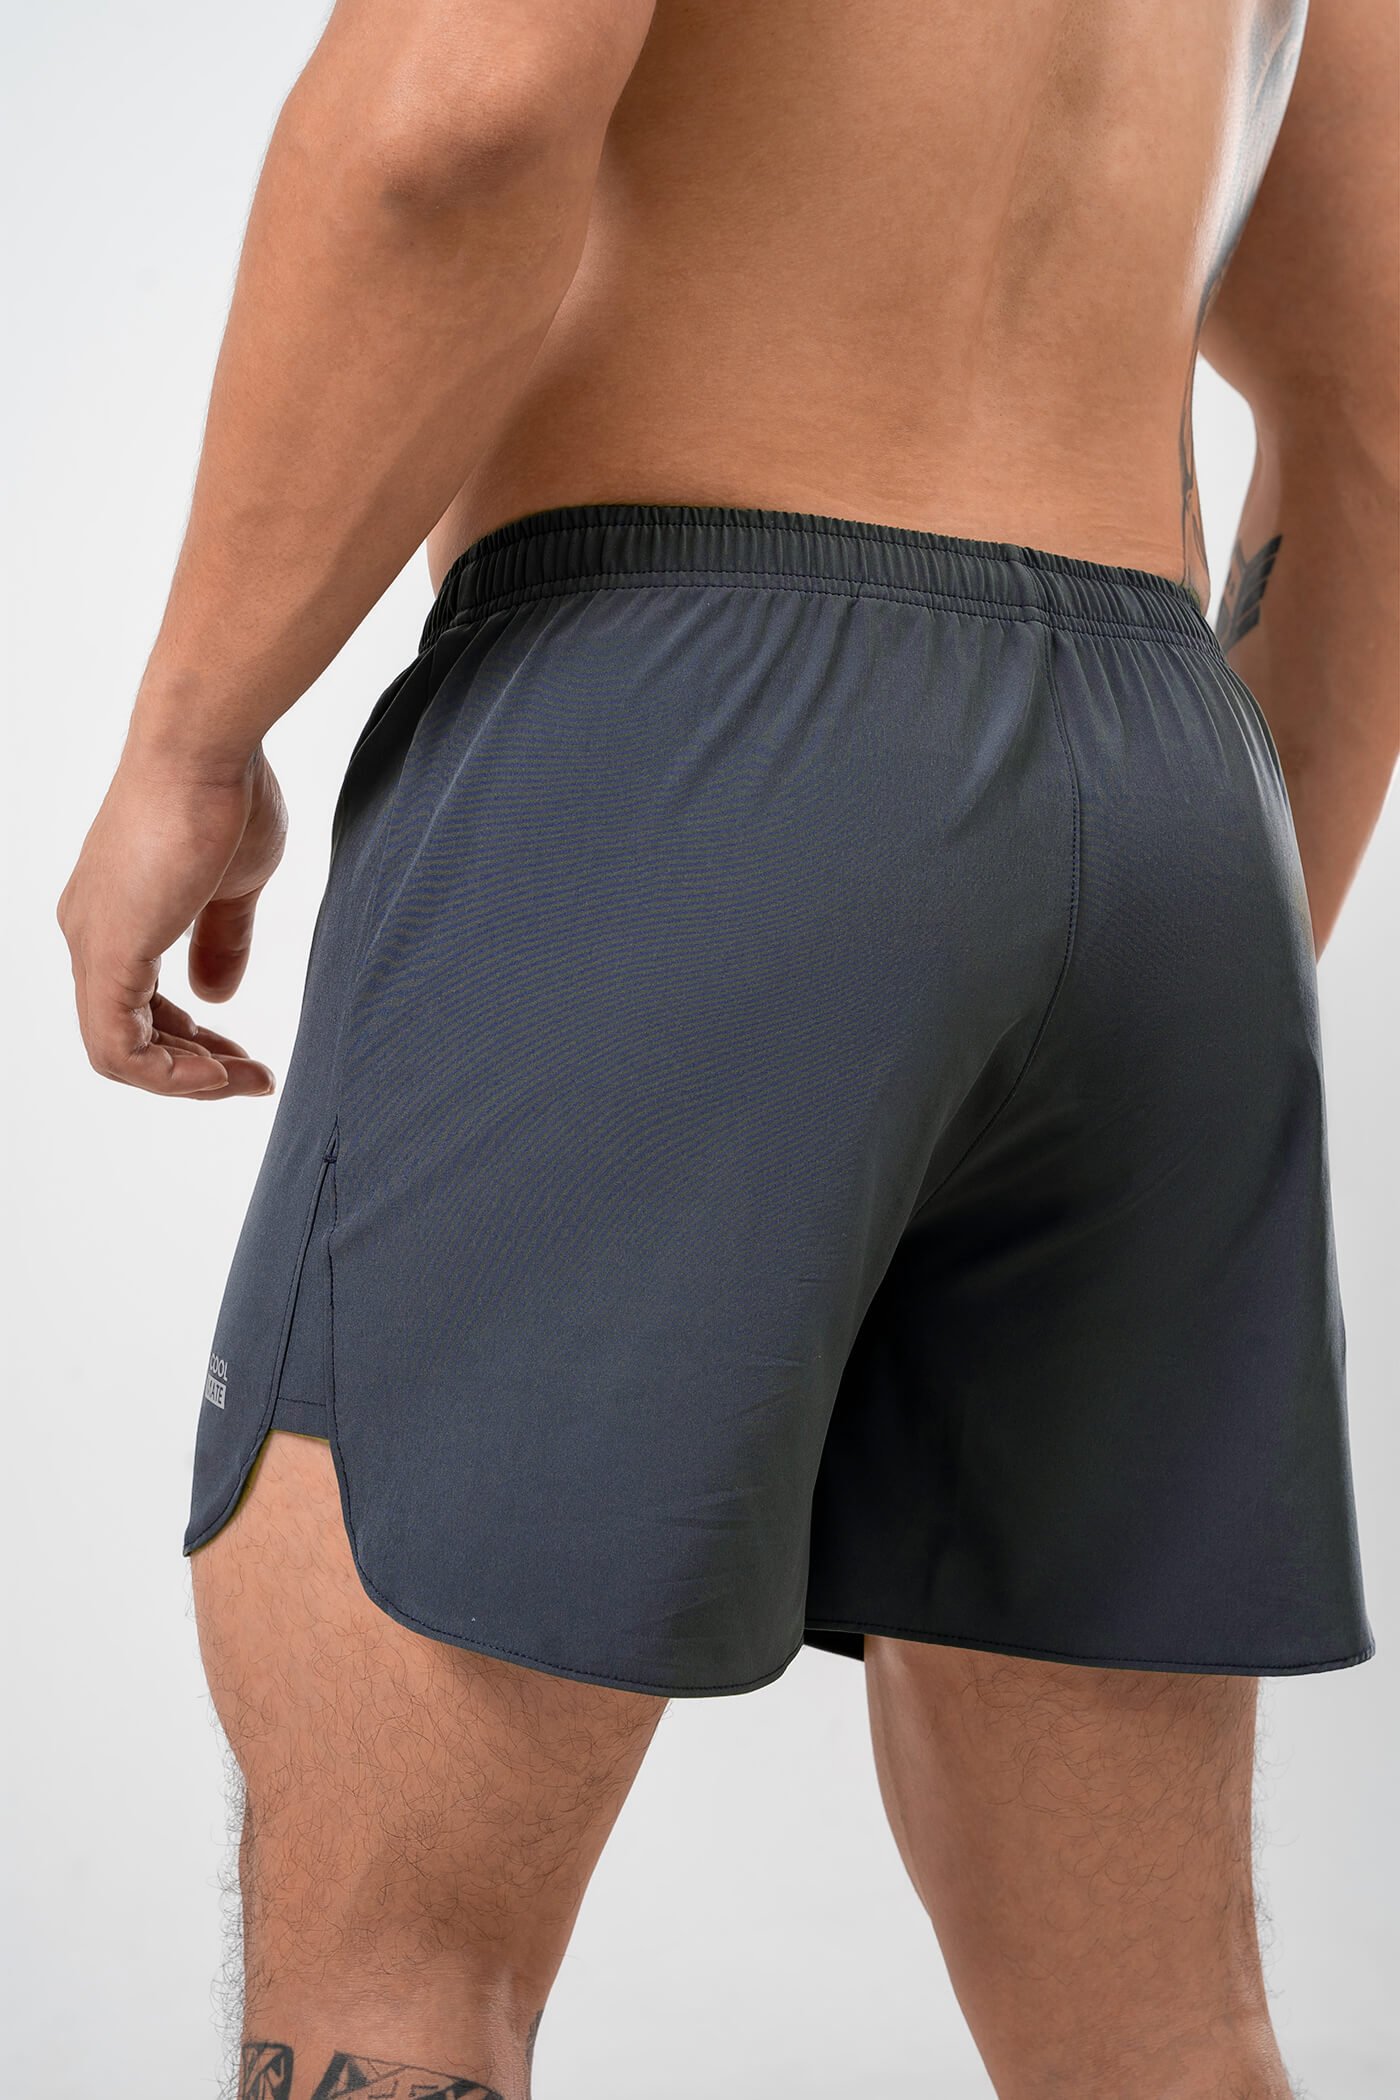 Combo 3 Shorts chạy bộ Basics  3